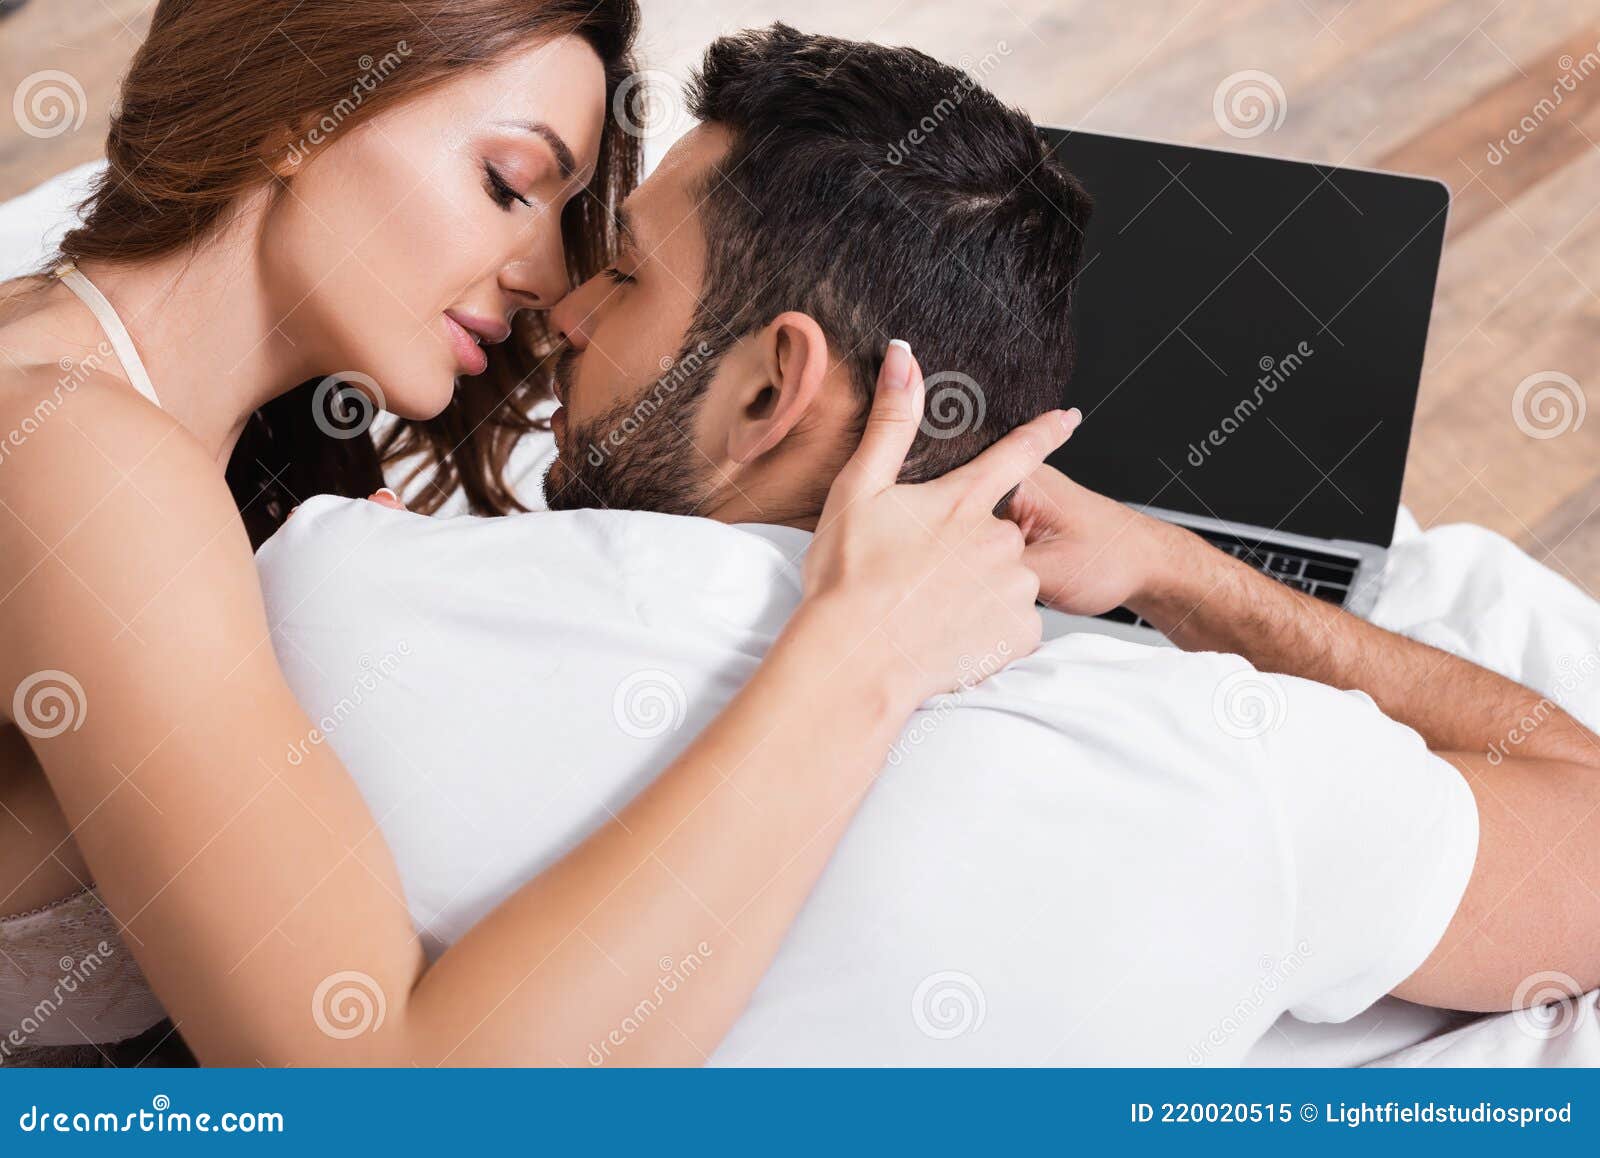 Woman Kissing Boyfriend Near Blurred Stock Image